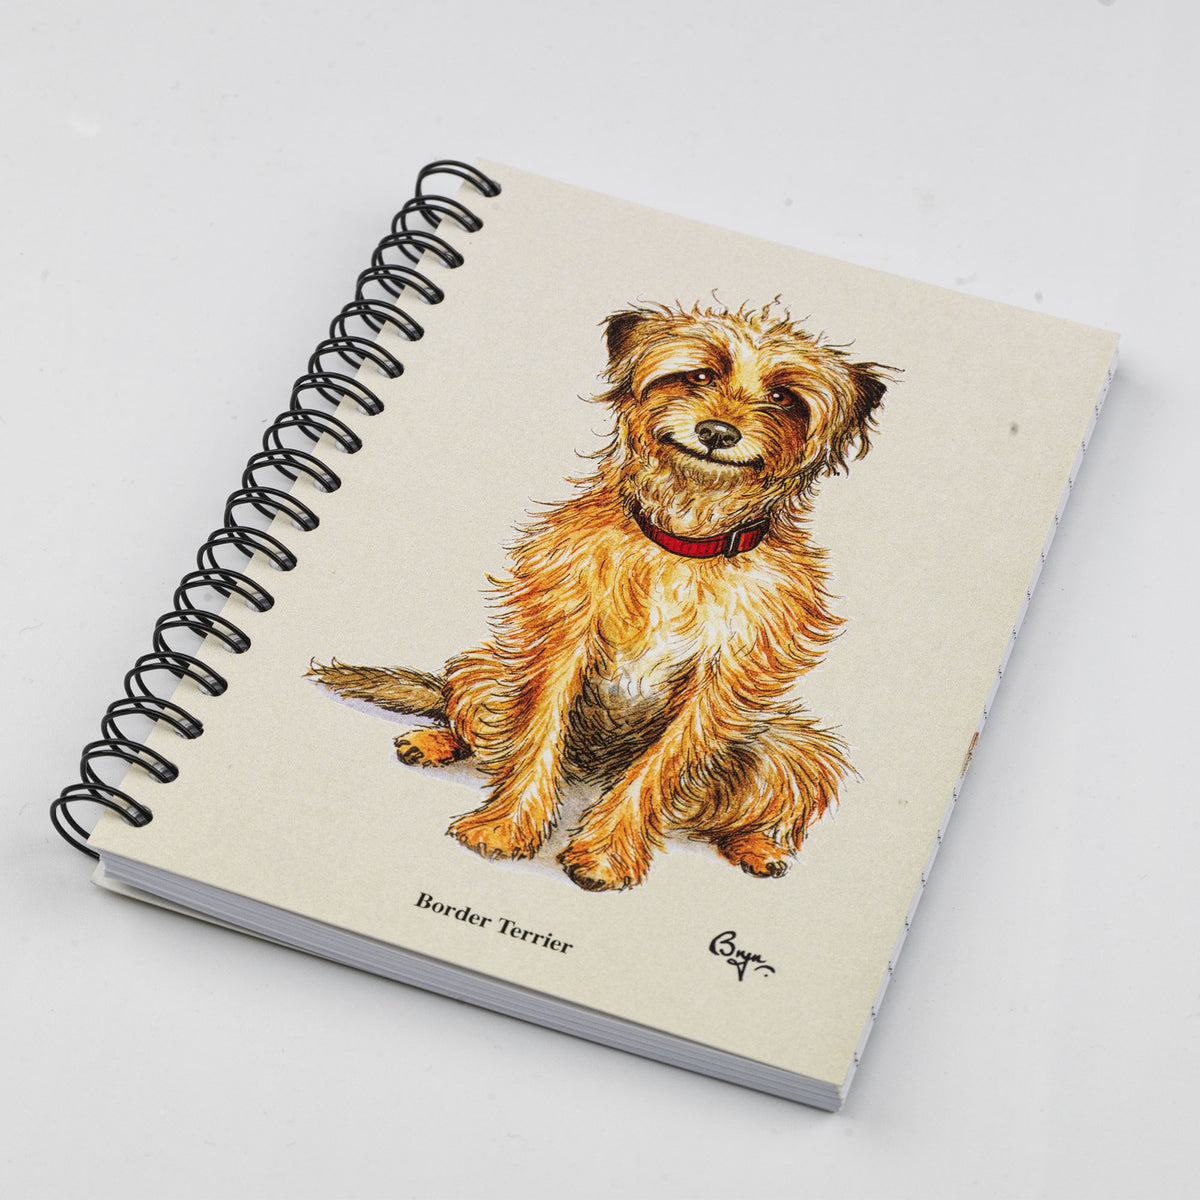 Border Terrier Know Your Dog Cartoon Tea Towel by Dick Twinney 